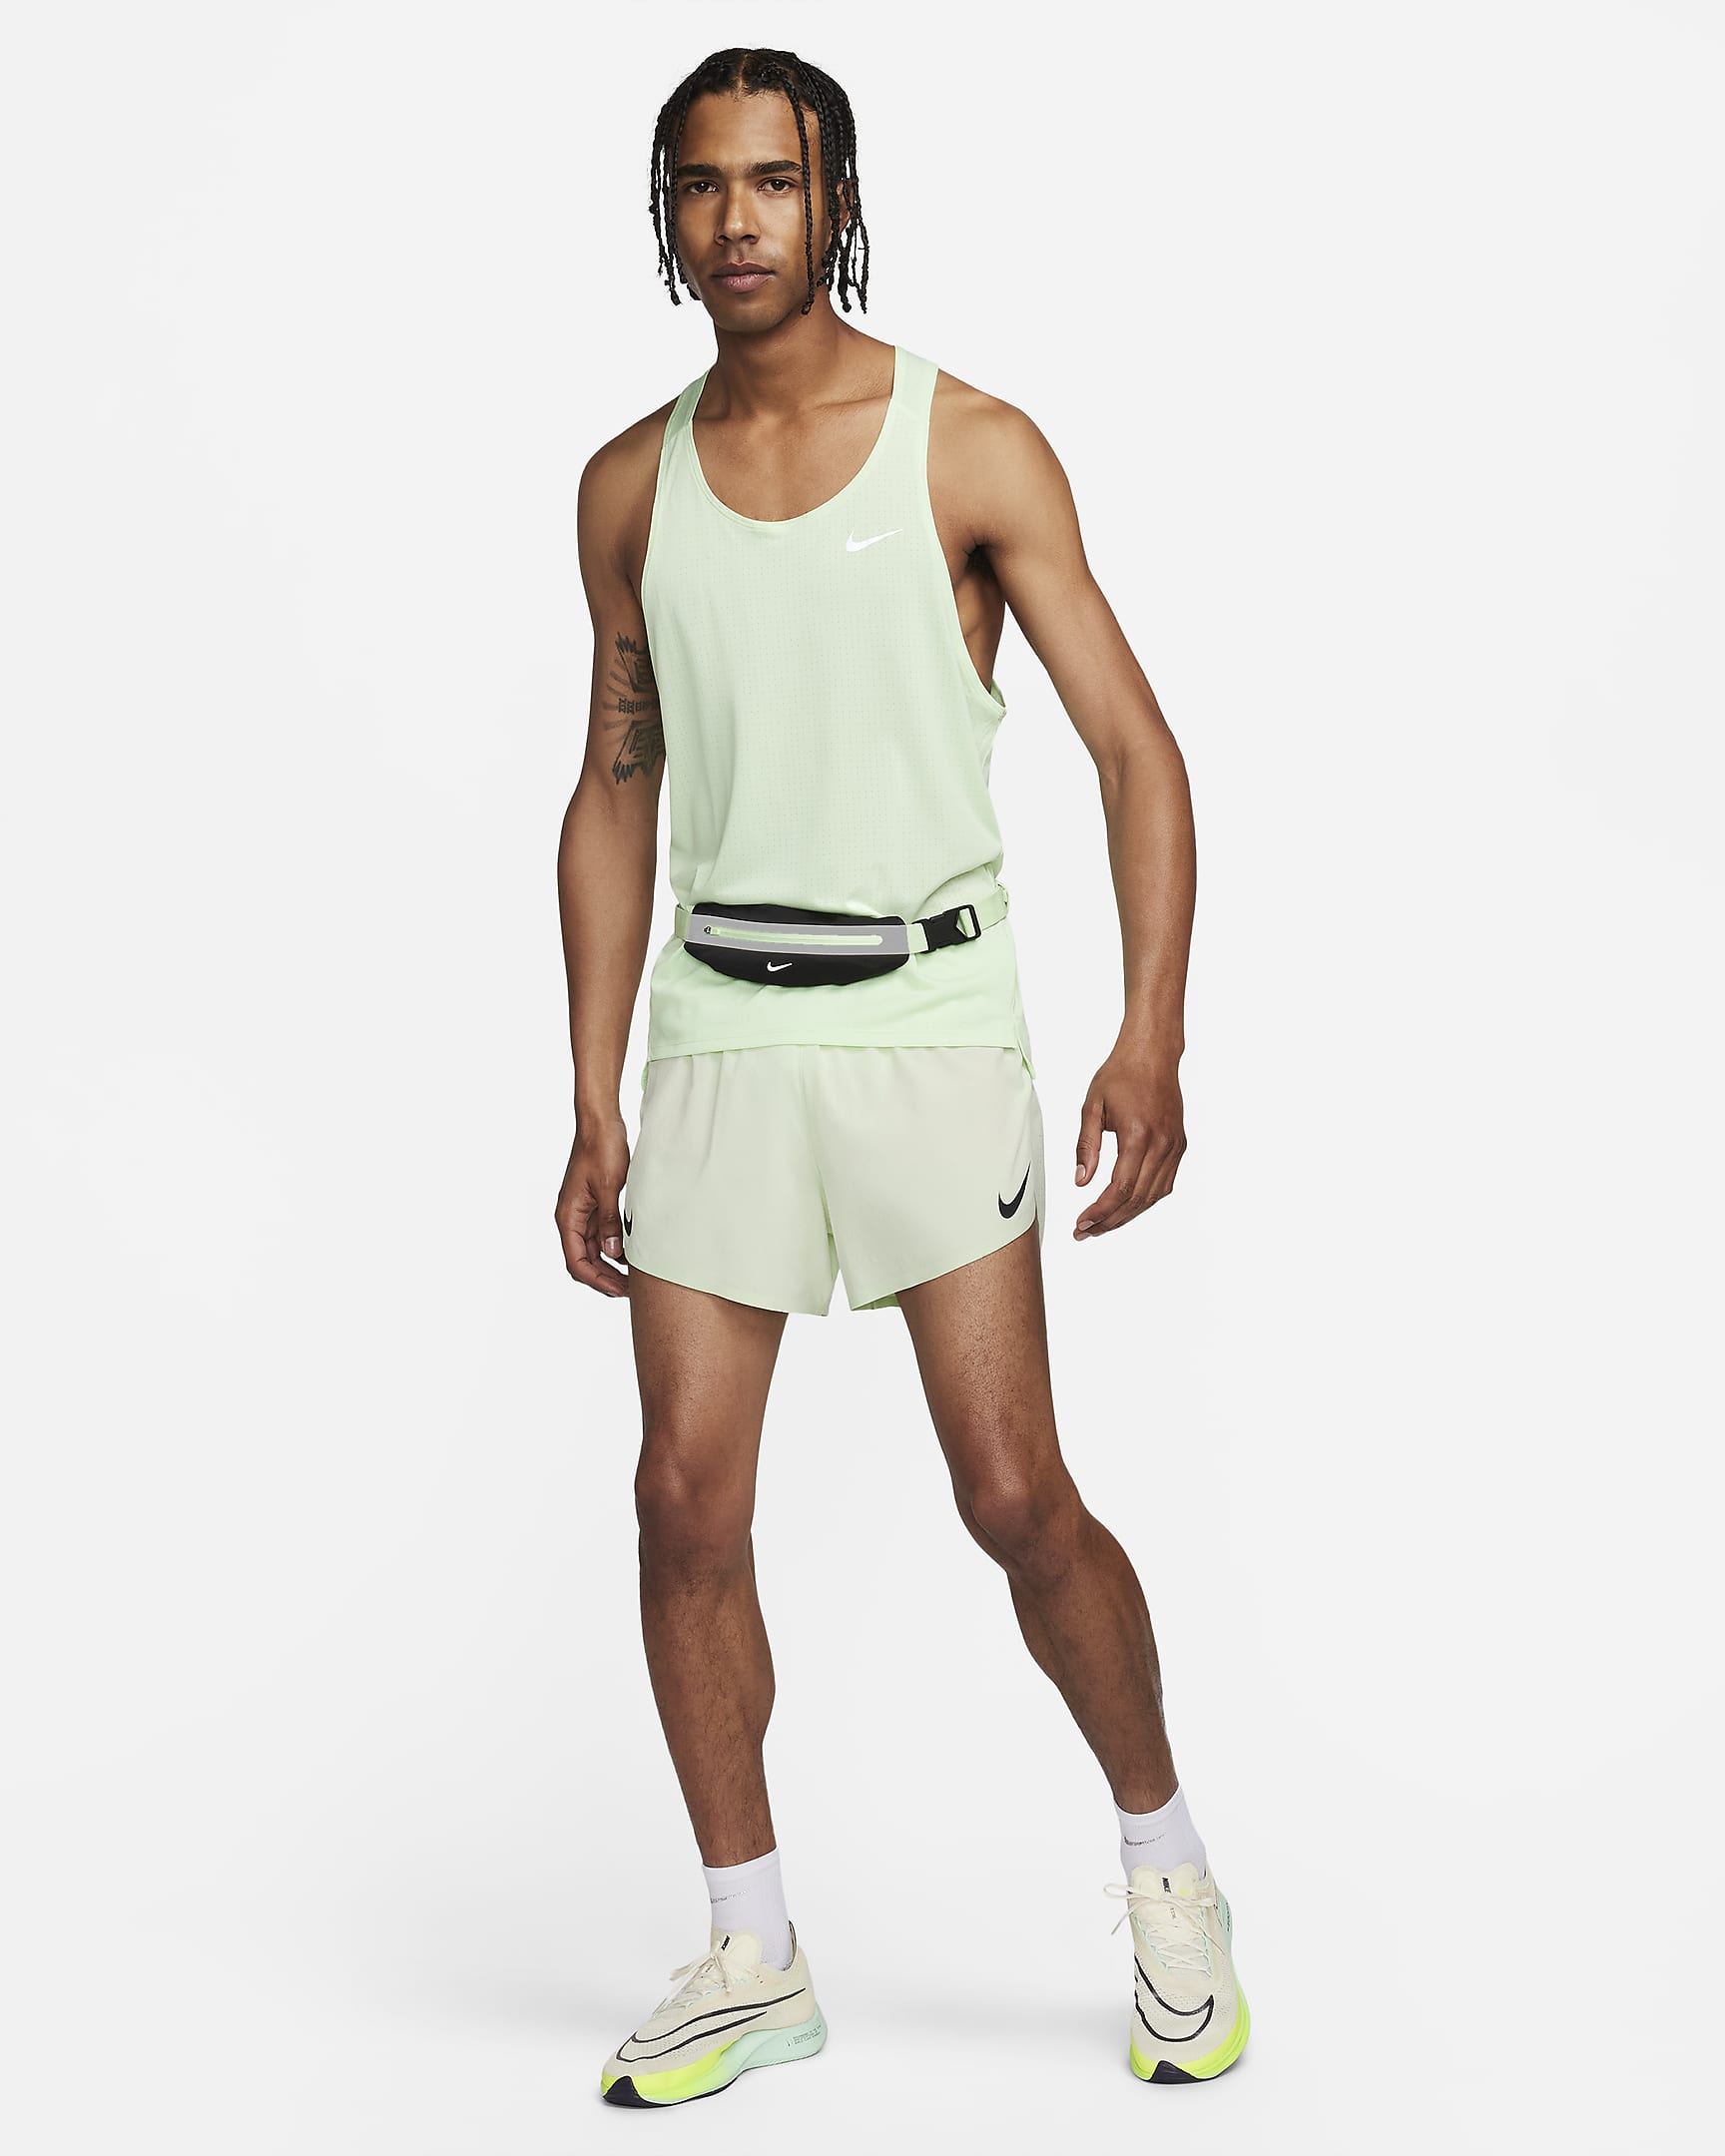 Nike Slim Running Fanny Pack - Vapor Green